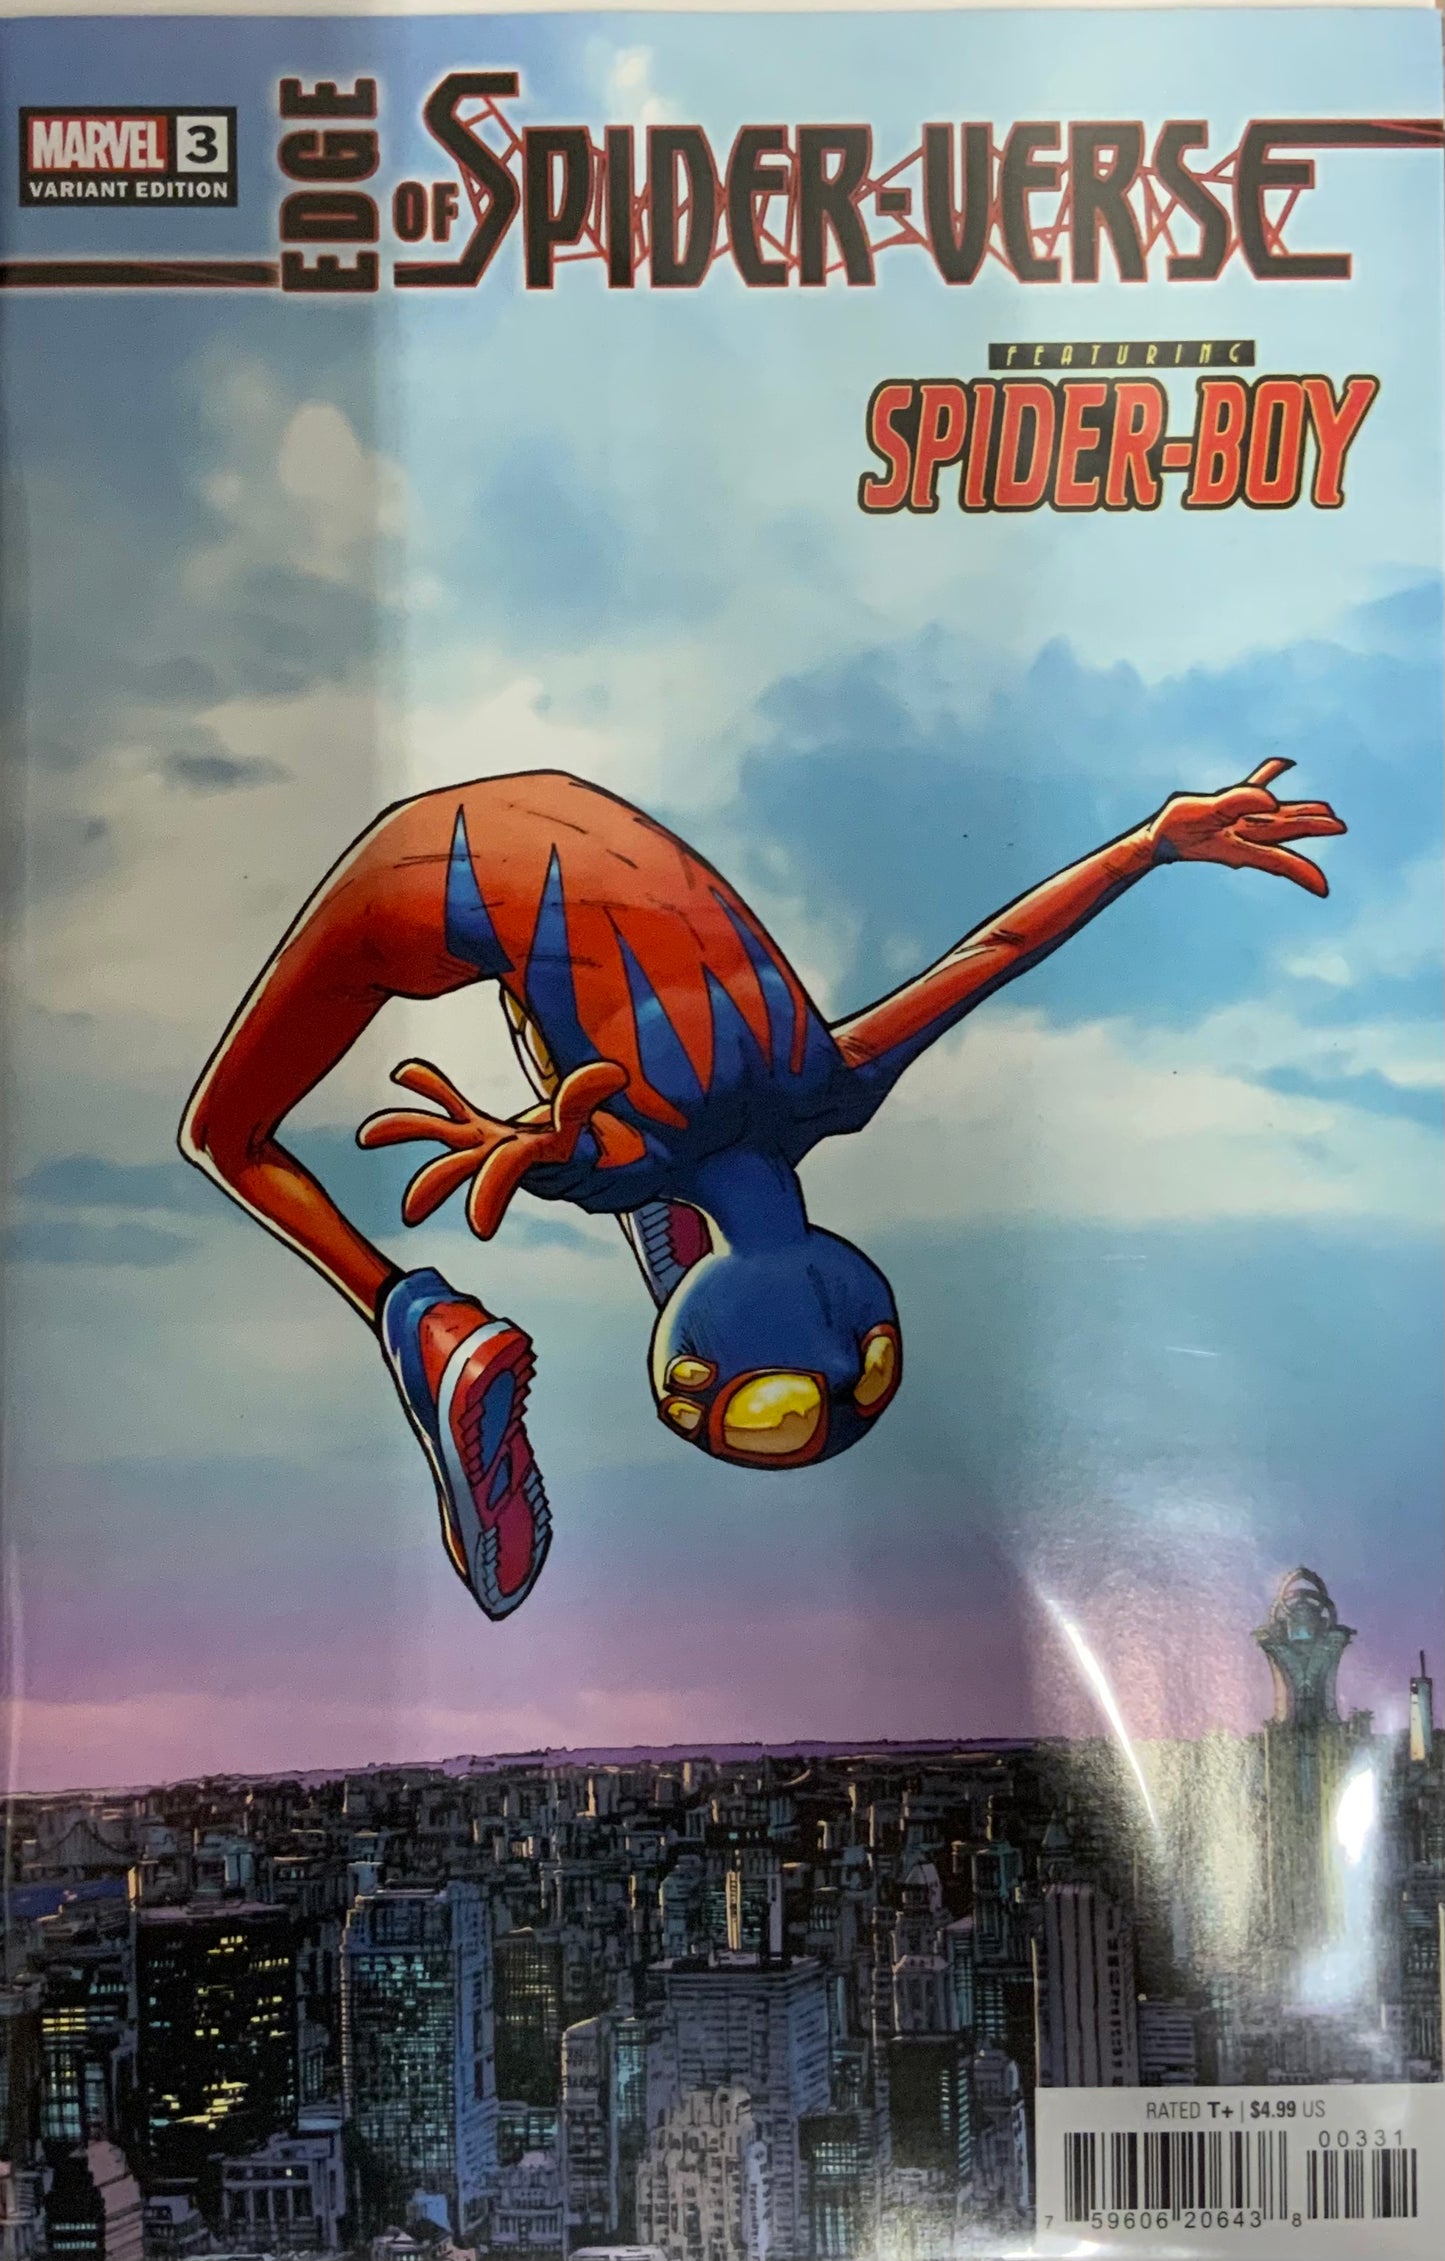 Edge of the Spider-Verse Featuring Spider-Boy issue 3